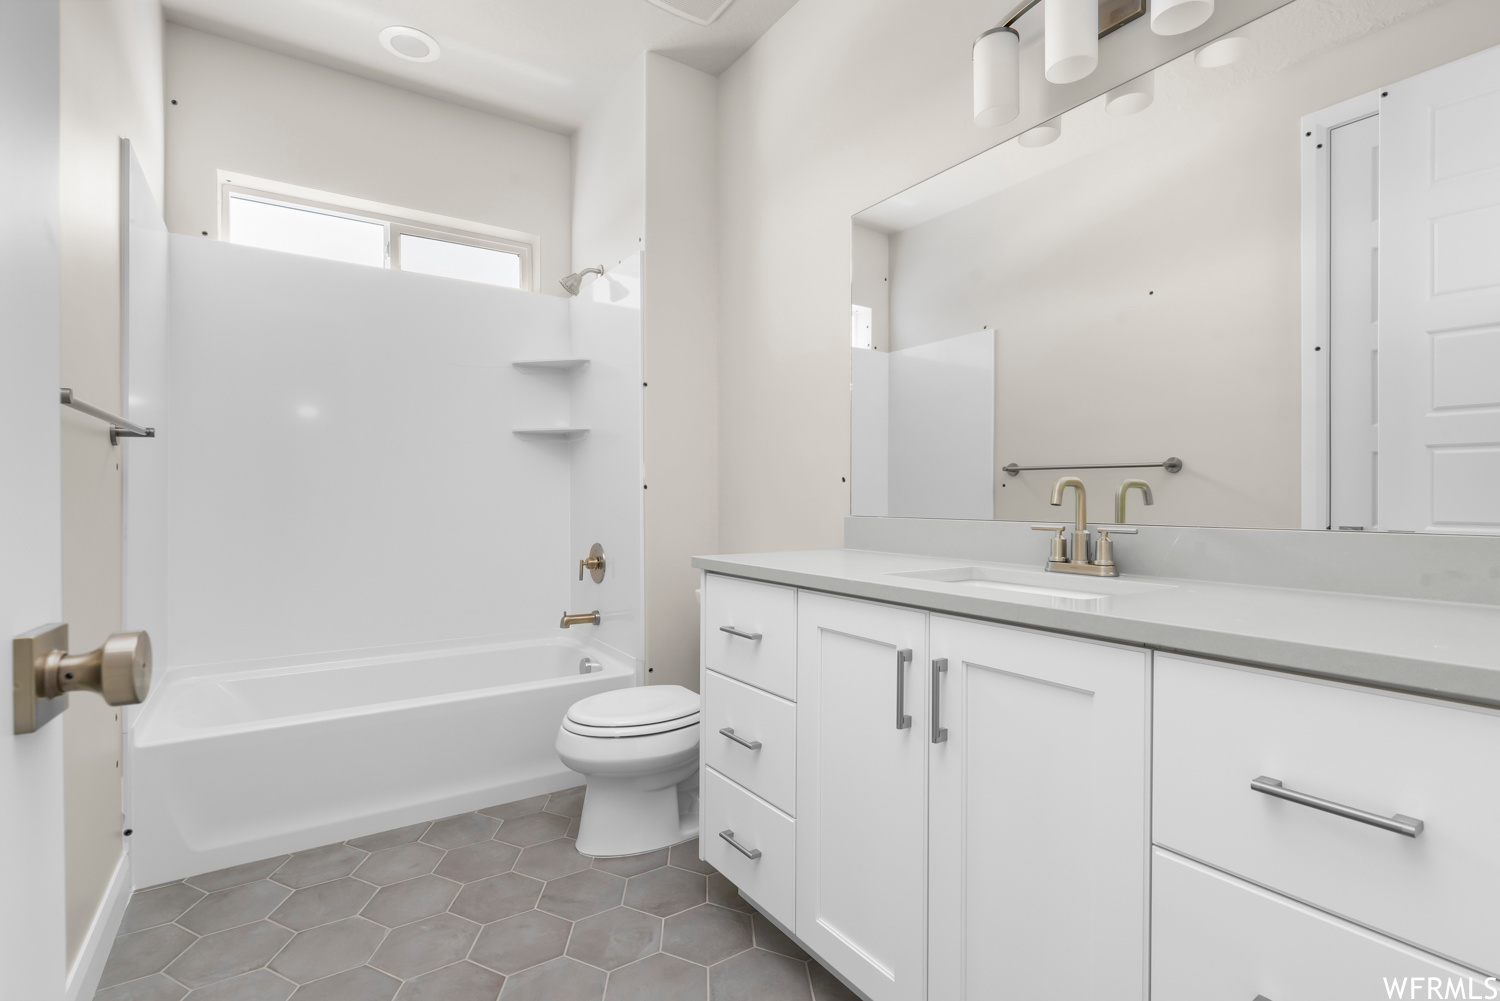 Full bathroom with toilet, tile flooring, bathtub / shower combination, and oversized vanity